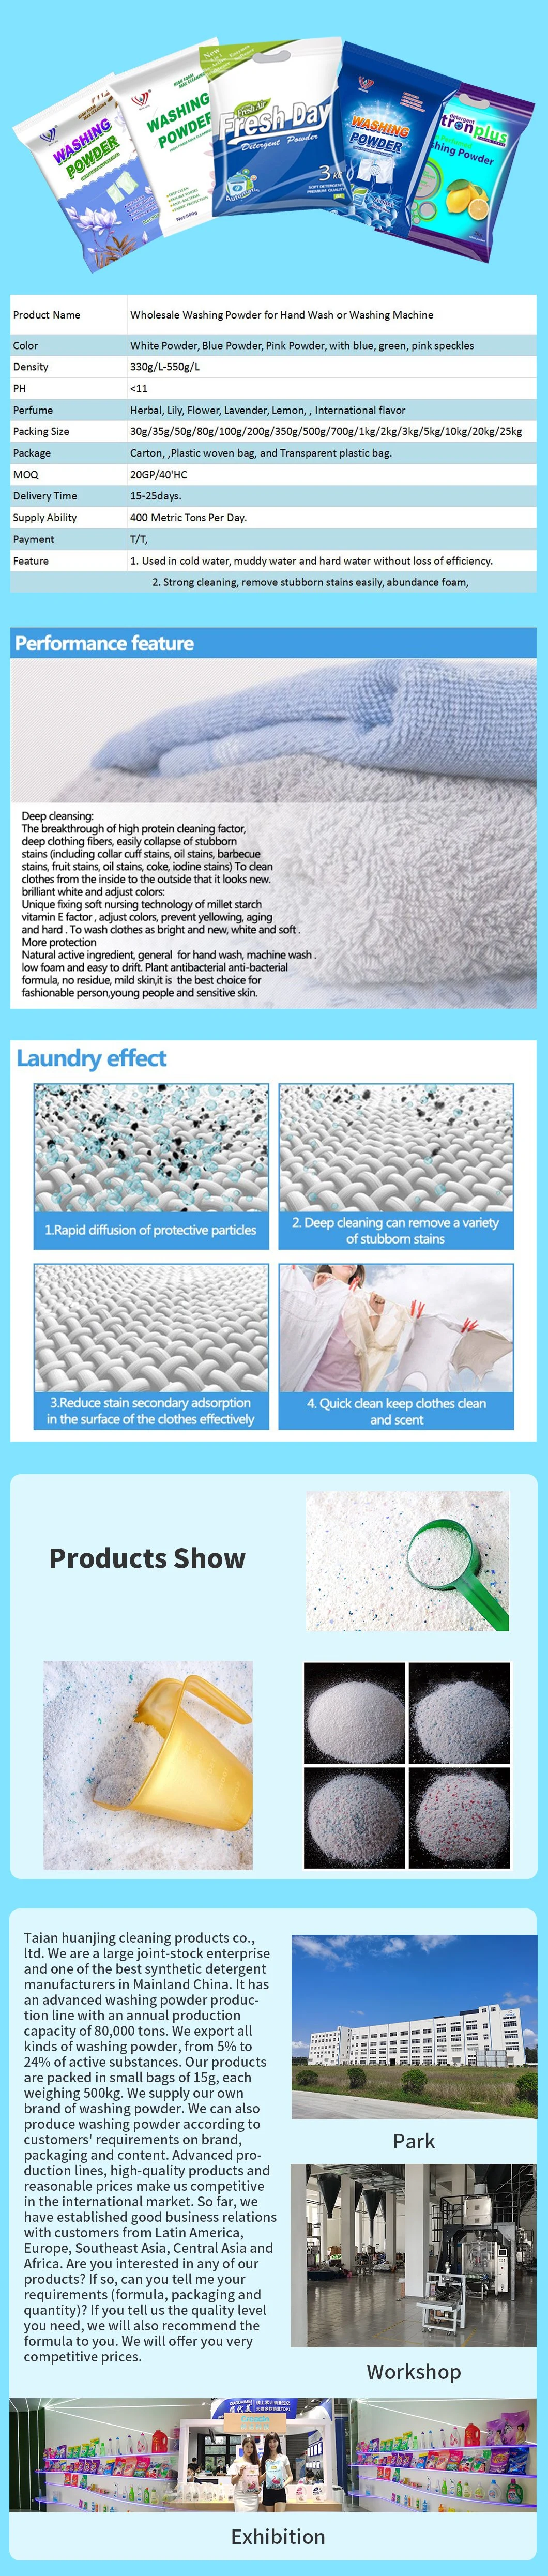 China Much Foam with Fragrance Washing Powder Detergent Powder Laundry Powder/OEM/ODM